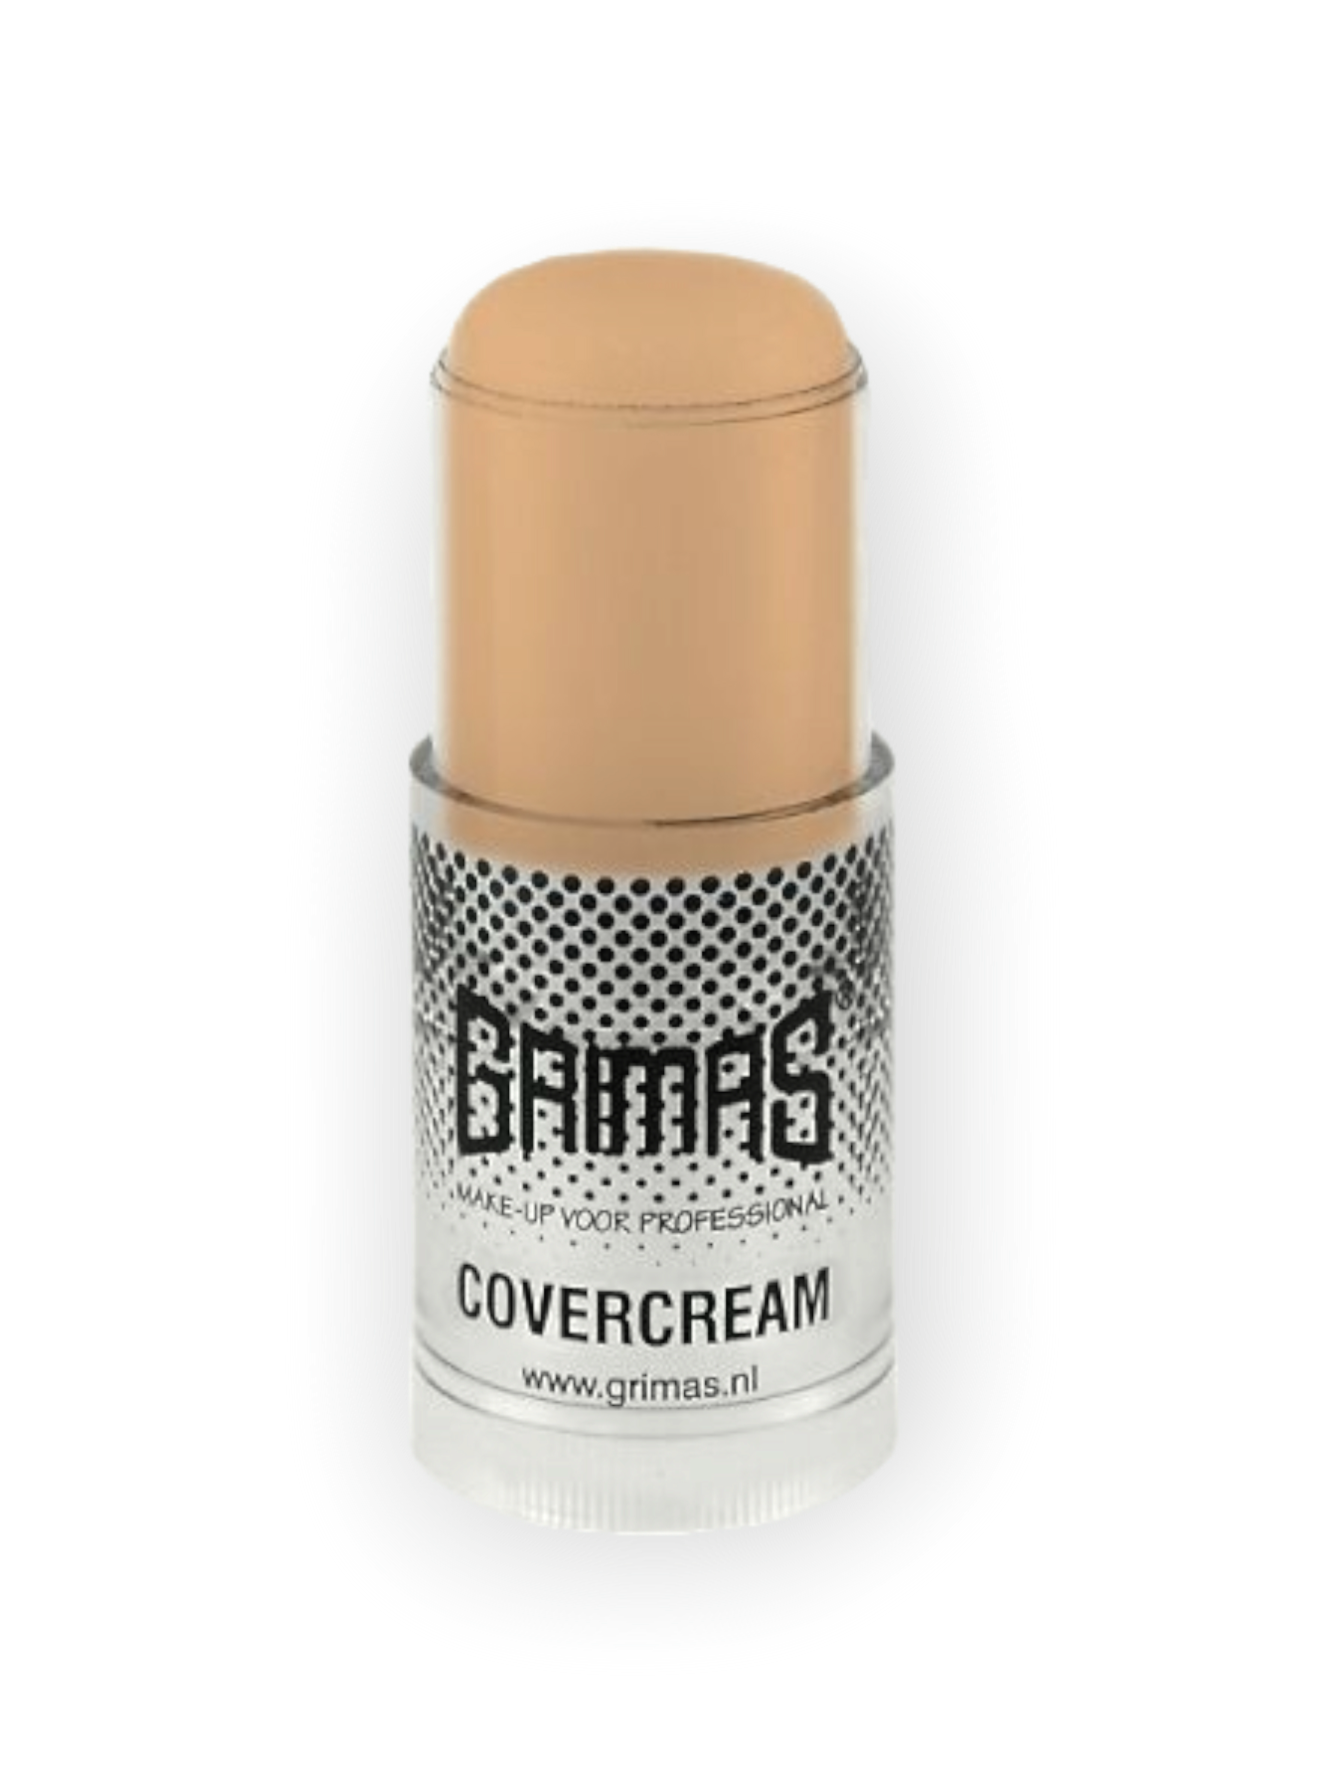 GRIMAS Cover Cream meikkivoidepuikko W2